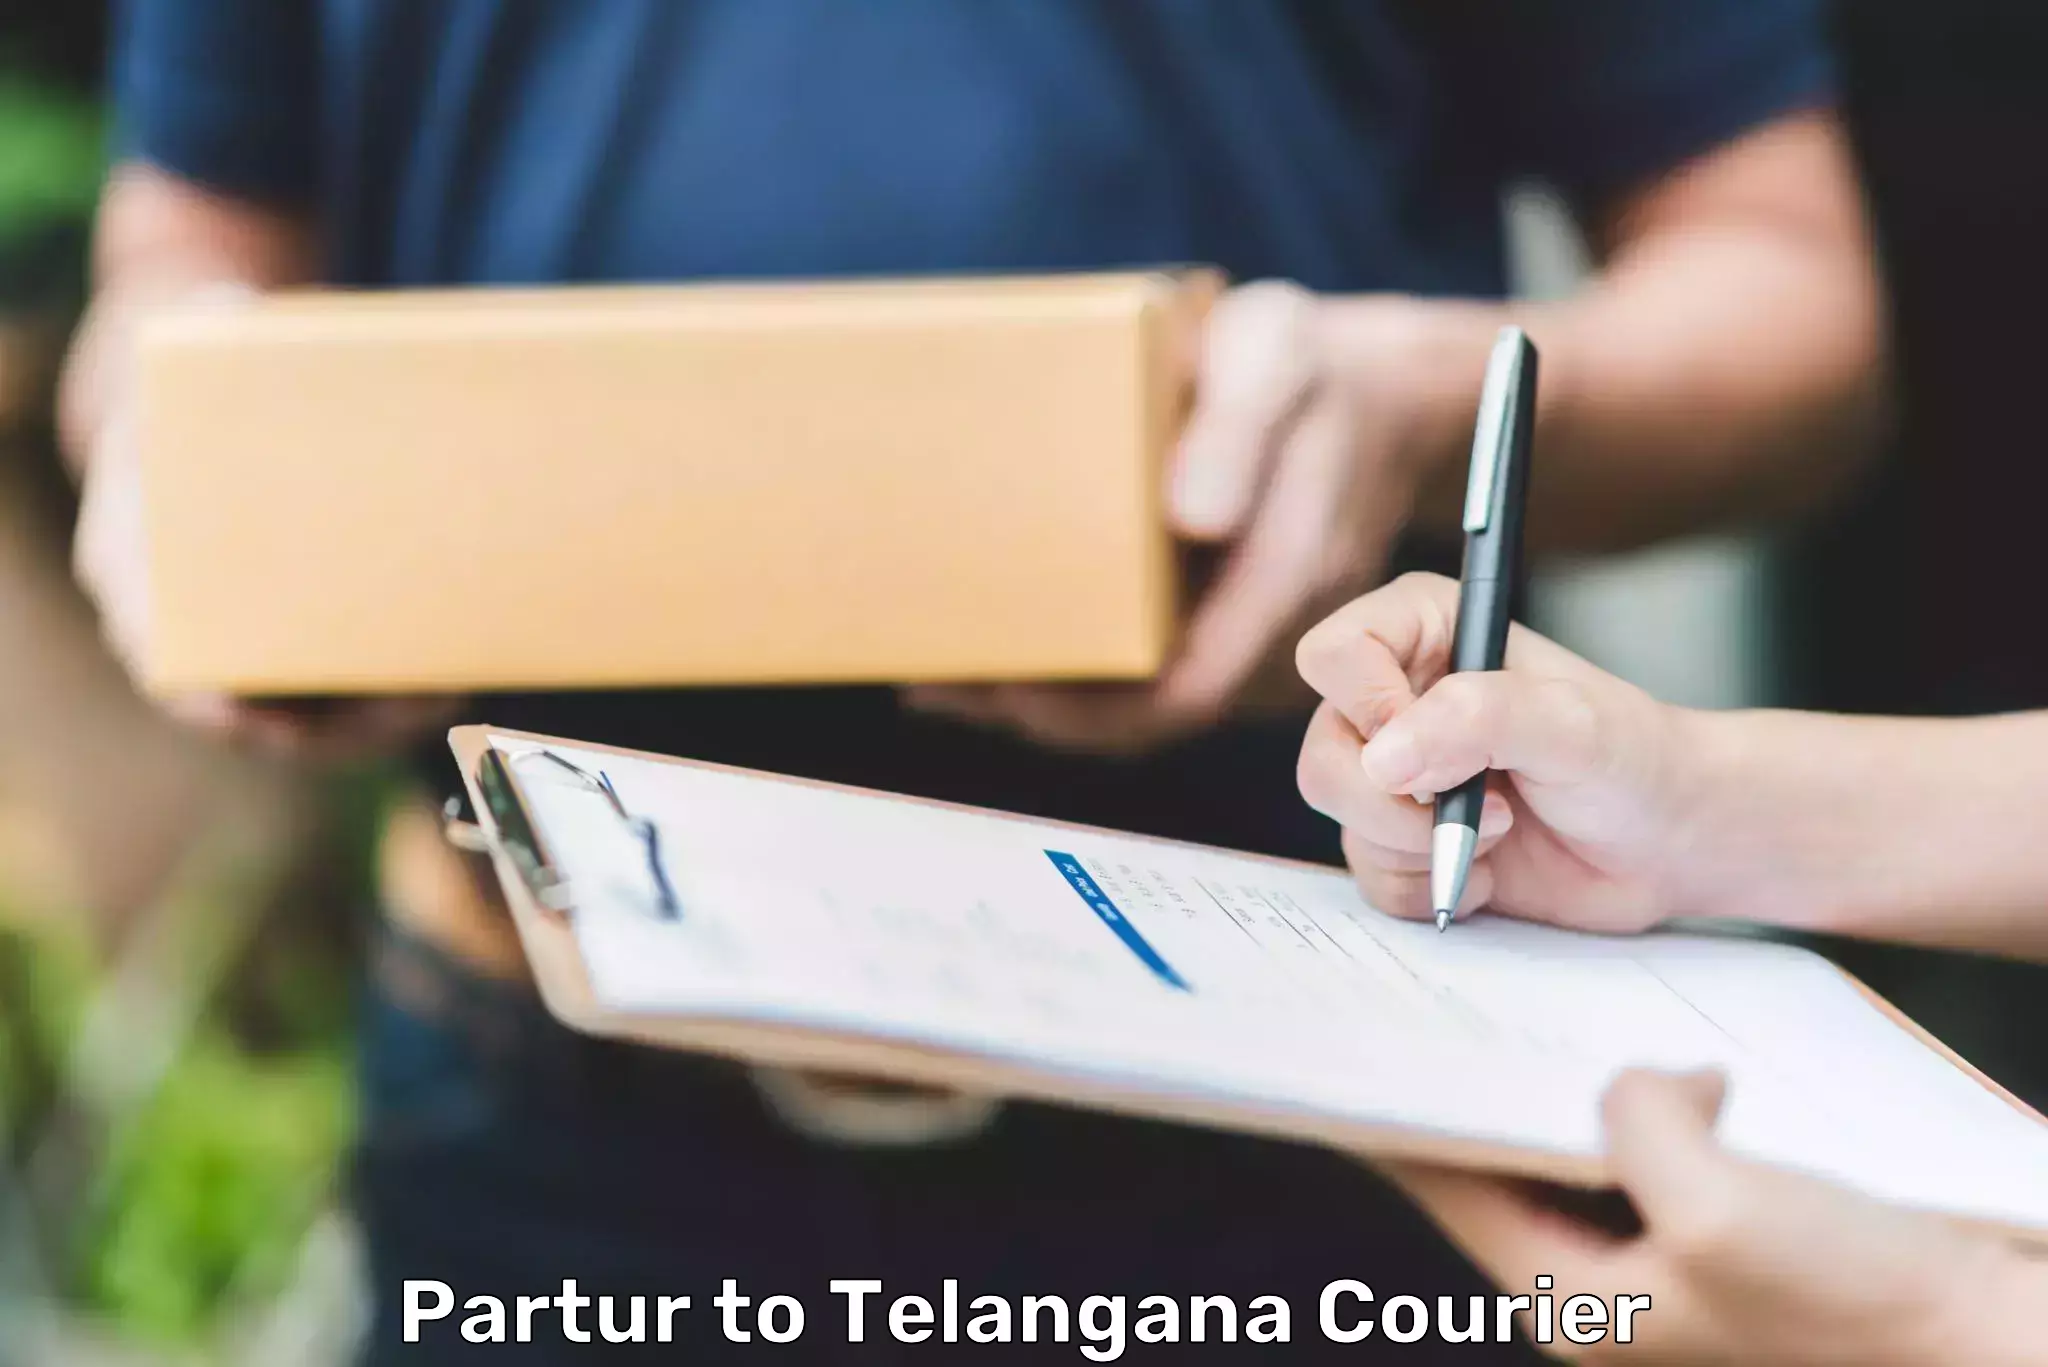 Digital courier platforms Partur to Manopad